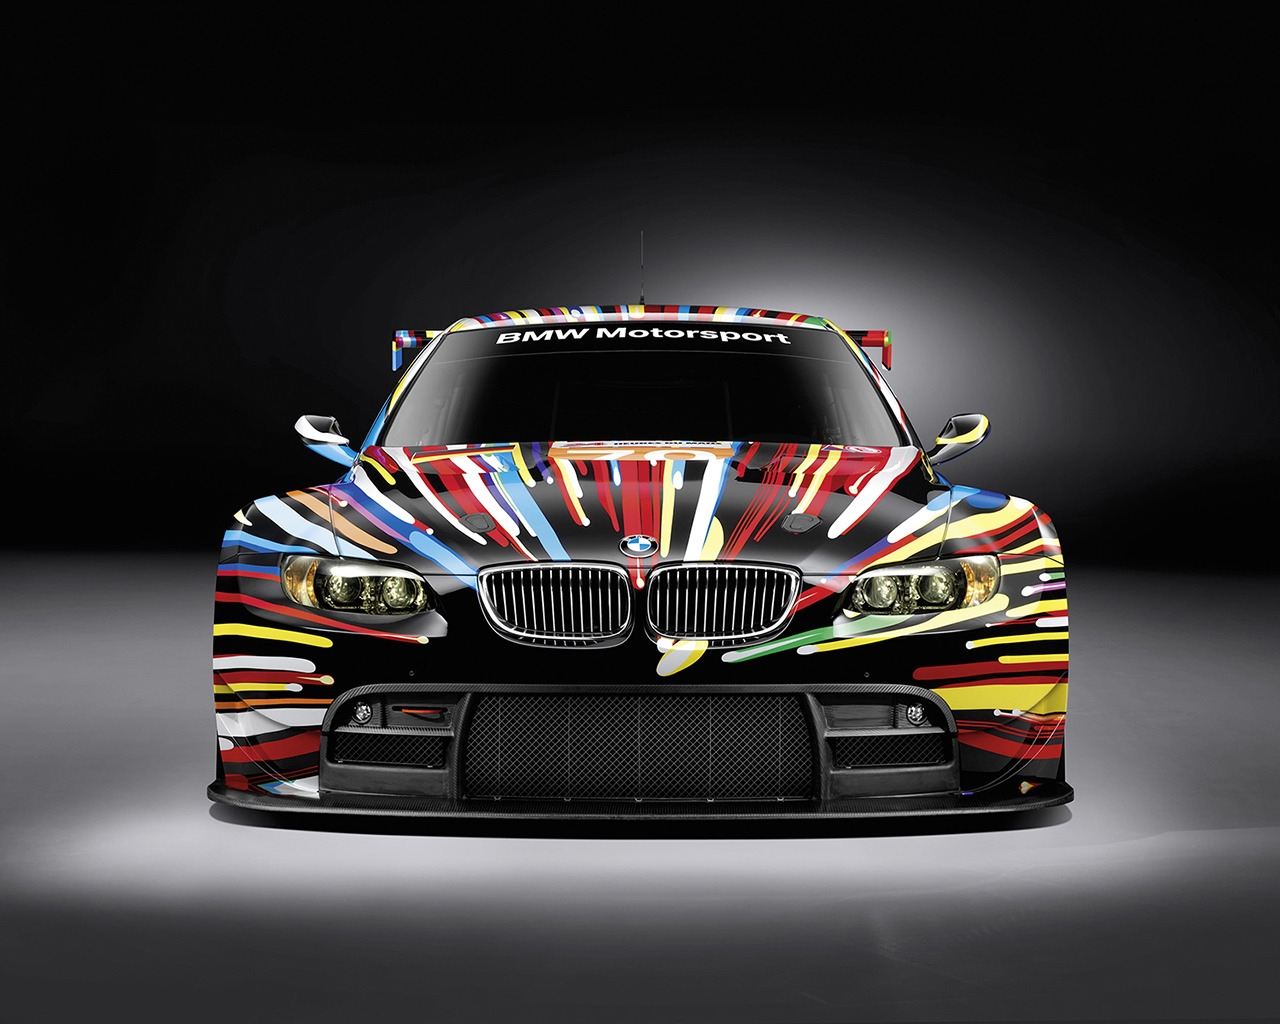 BMW M3 GT 2 Art for 1280 x 1024 resolution